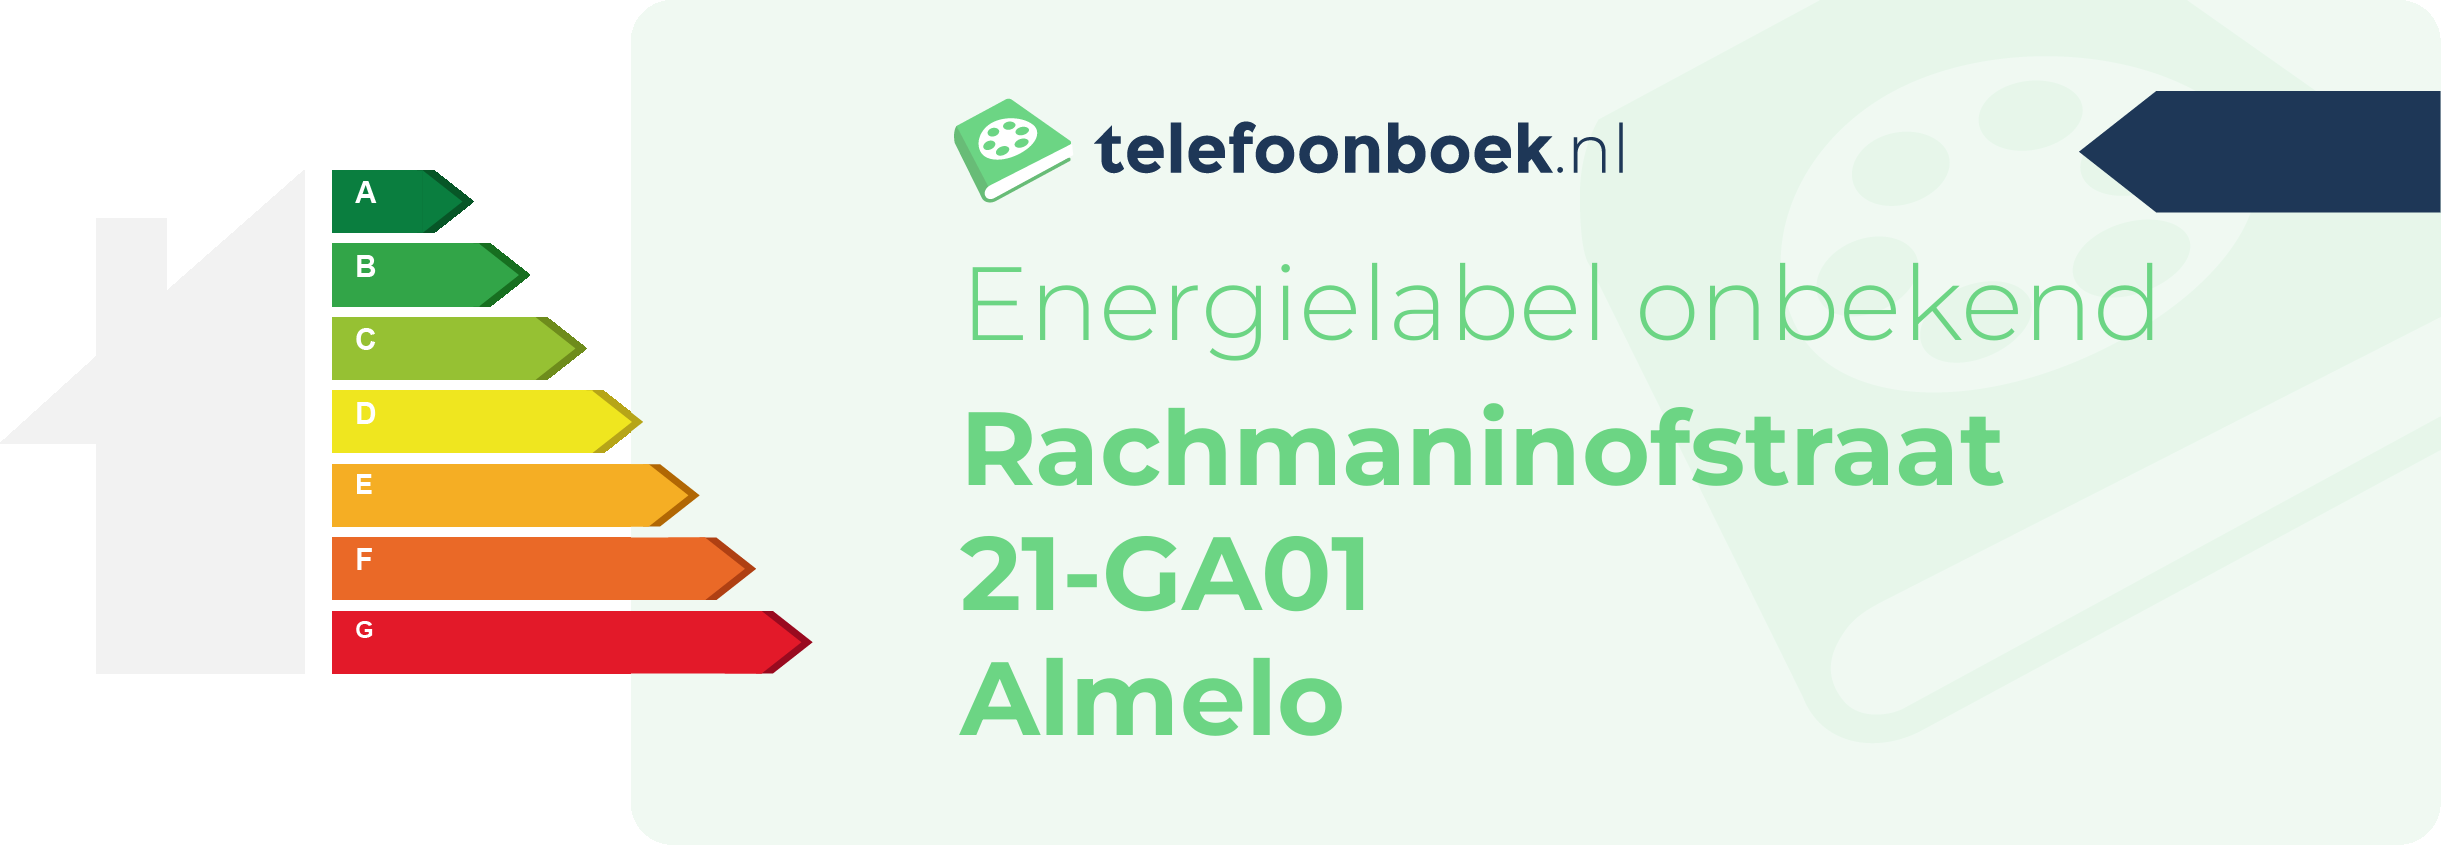 Energielabel Rachmaninofstraat 21-GA01 Almelo